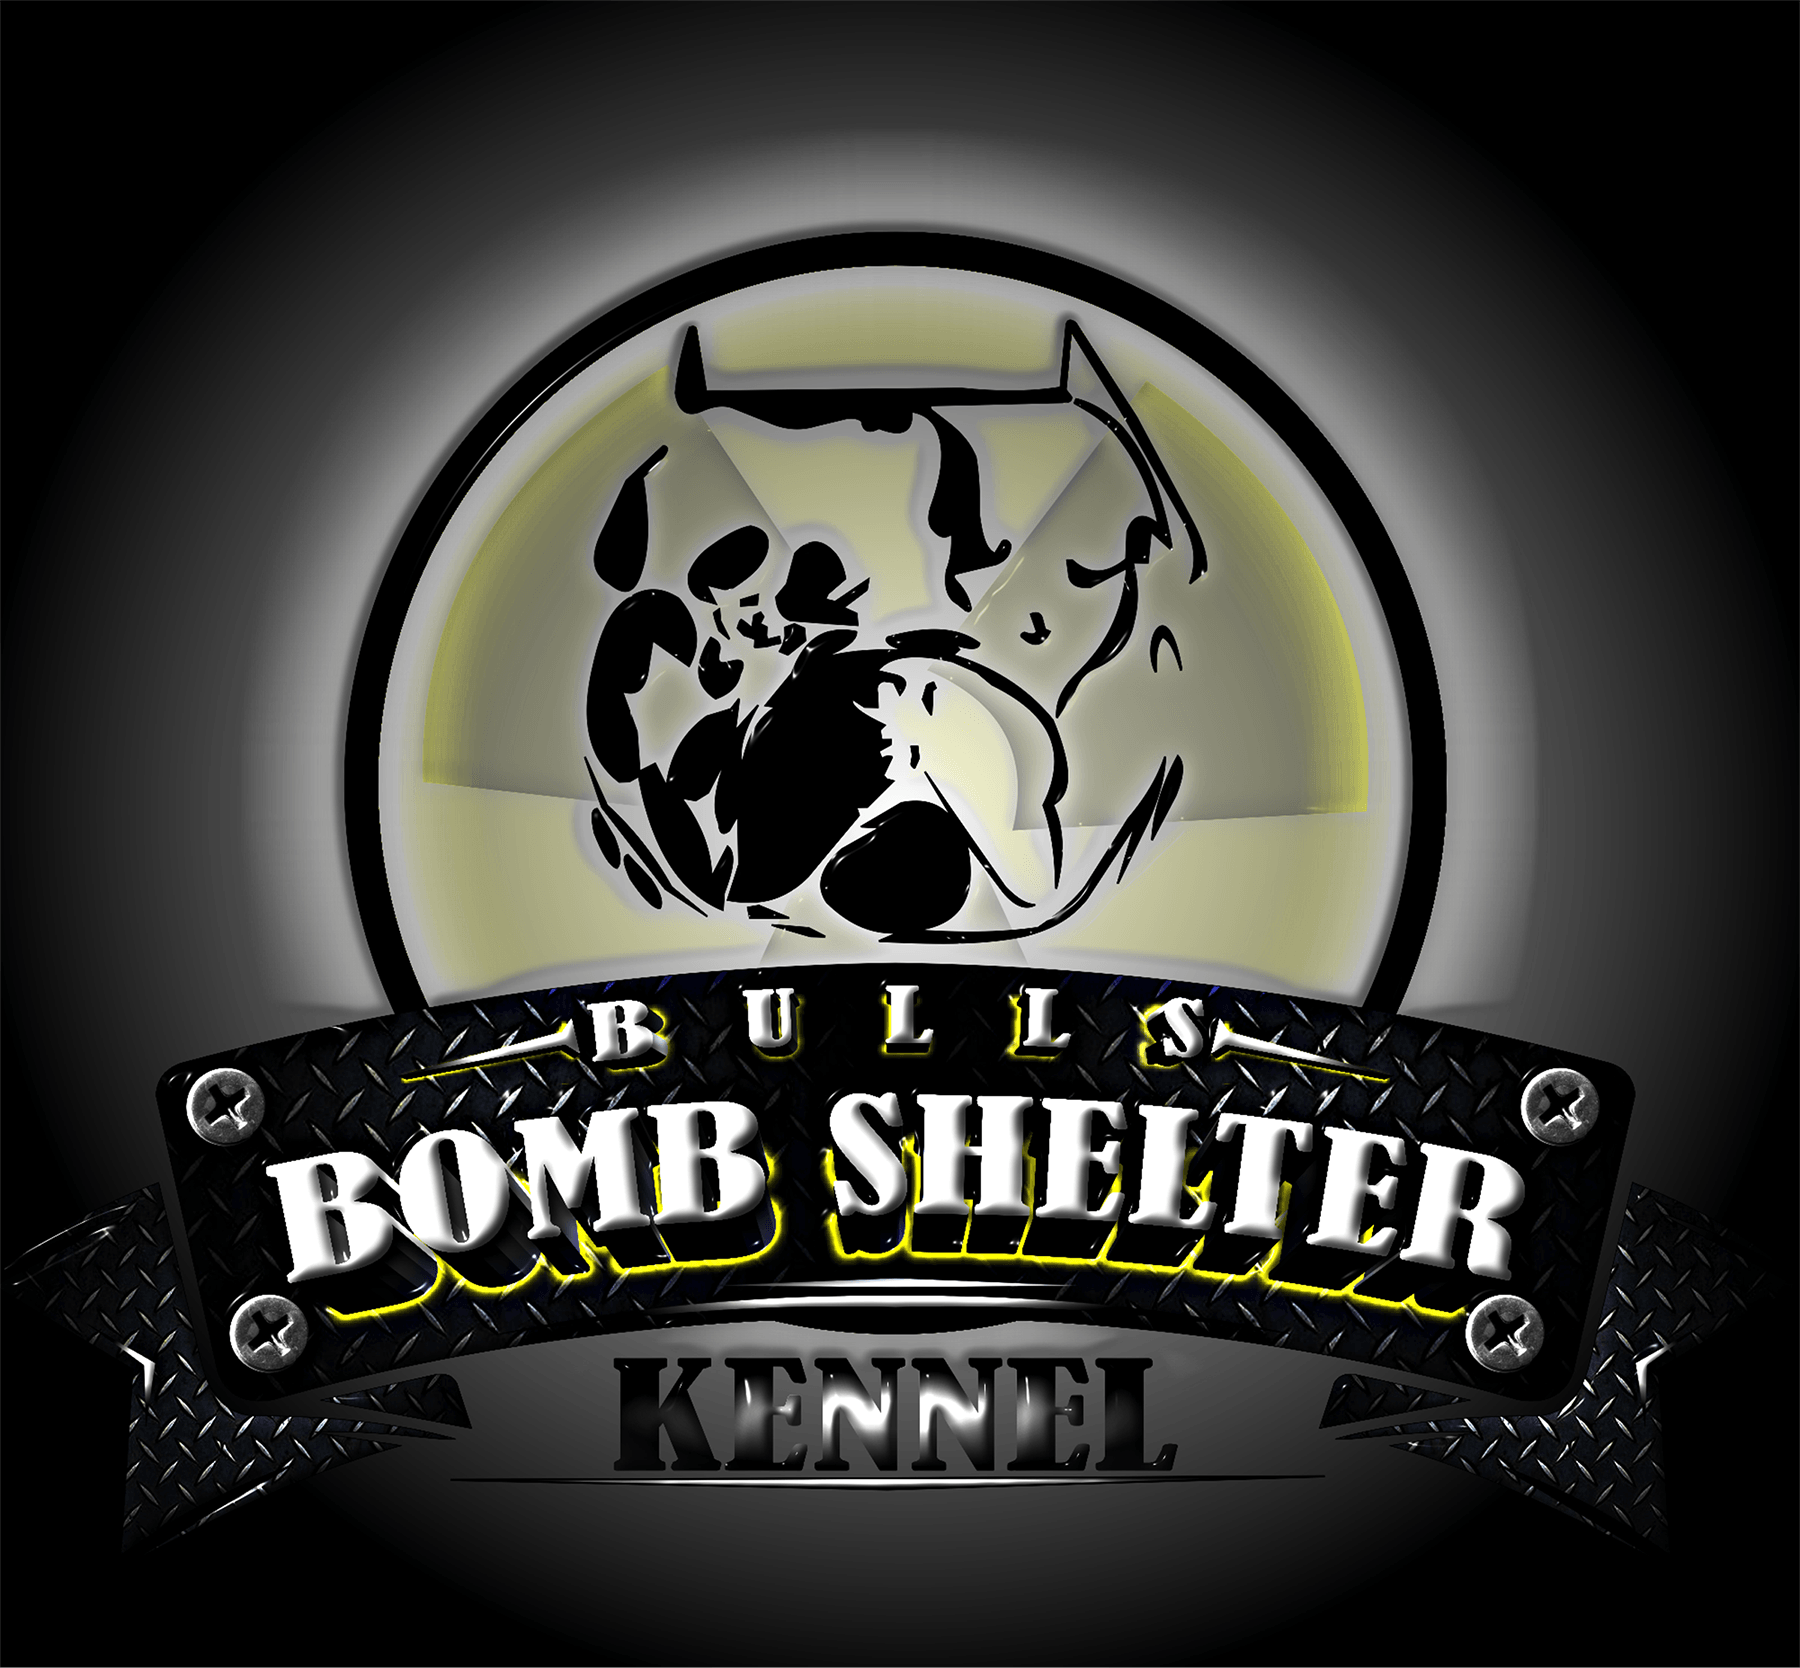 Bomb Shelter Logo - Bulls Bomb Shelter logo | American Bully Graphics | Bullying, Bomb ...